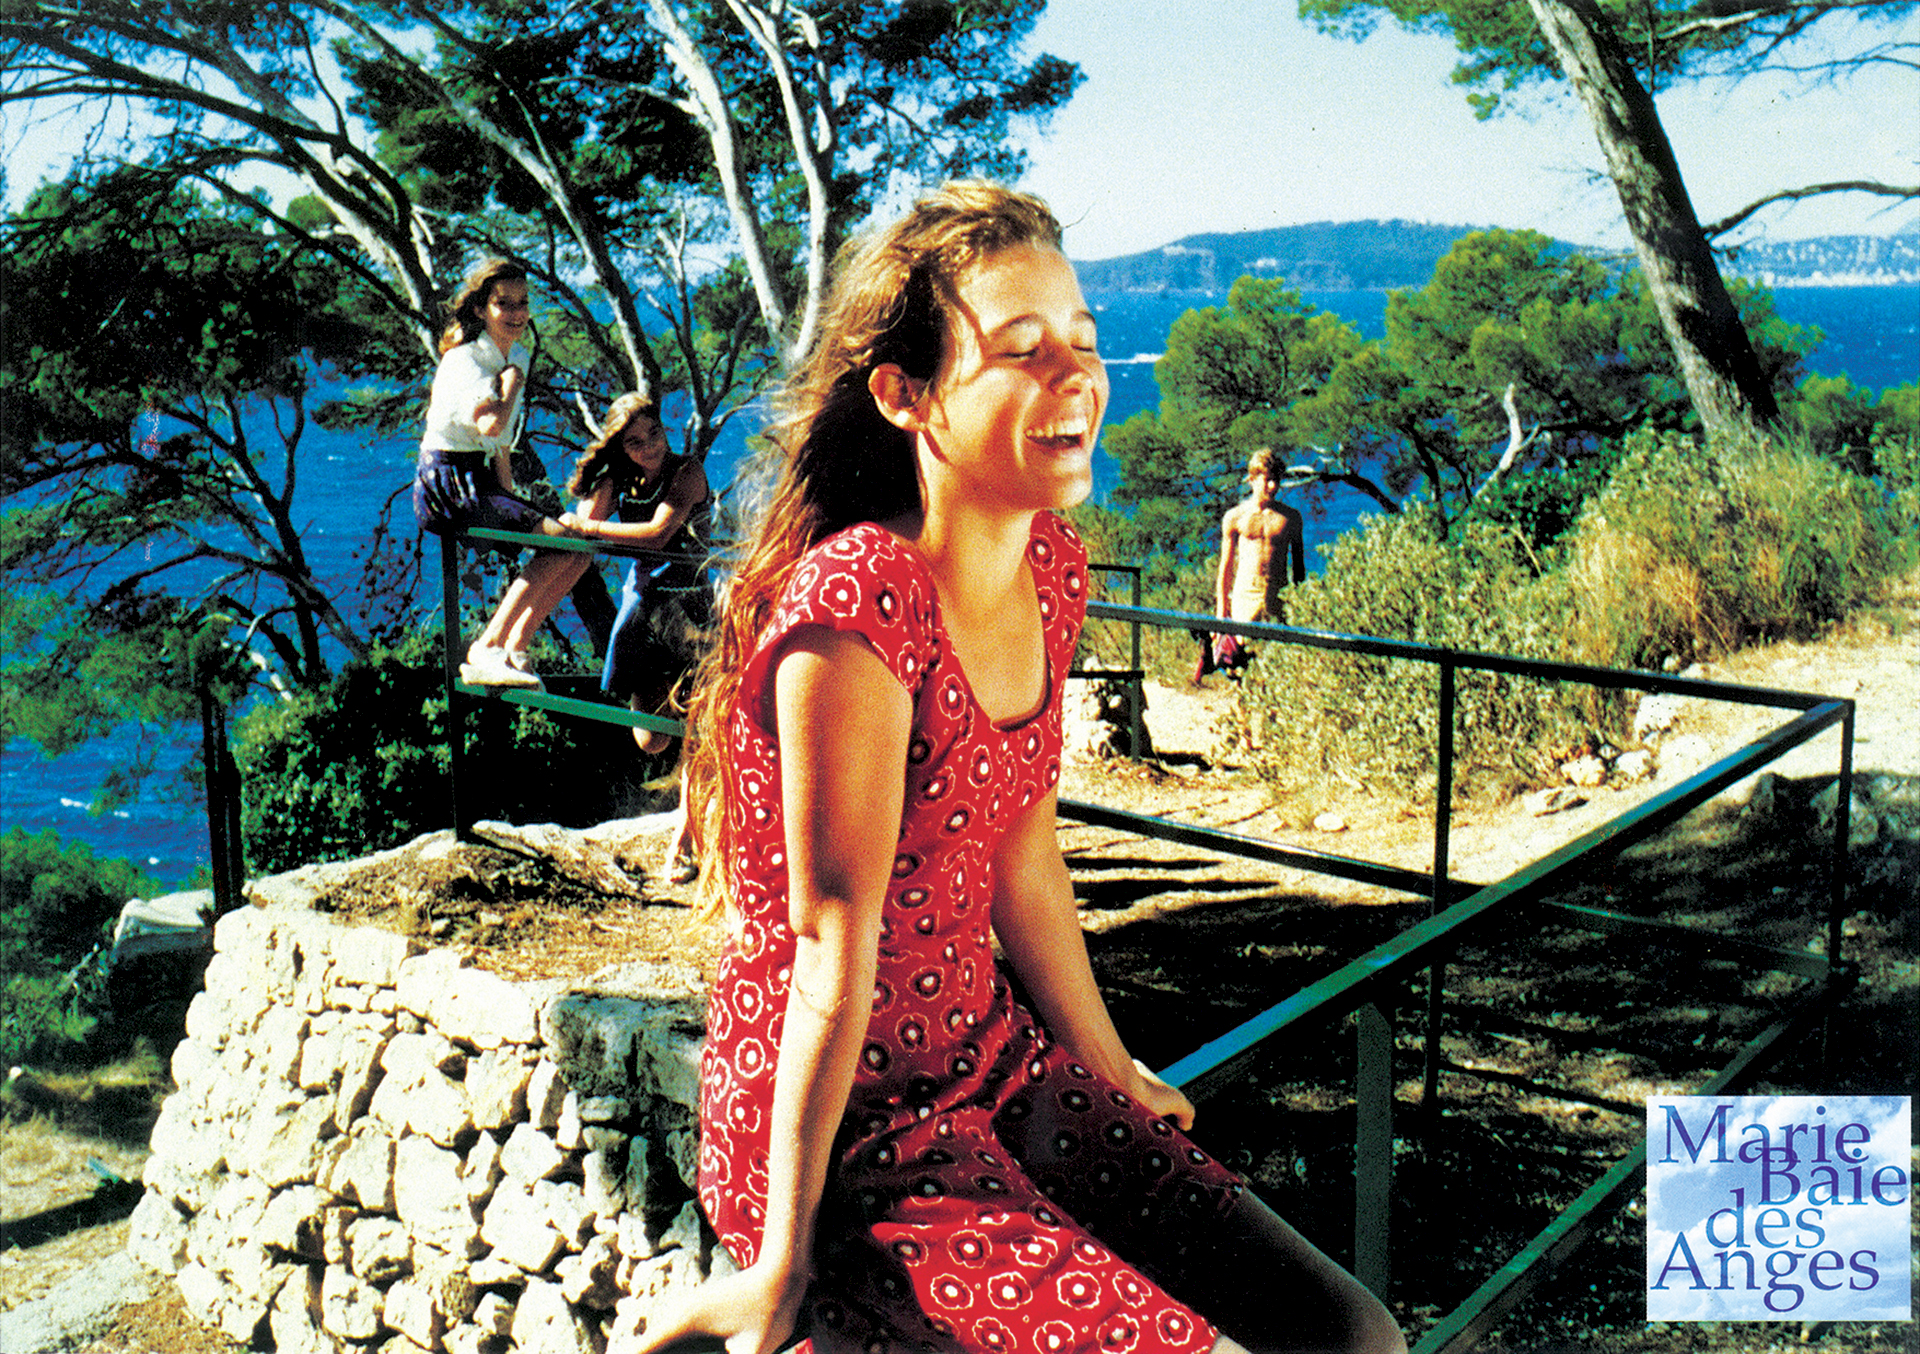 Marie Baie des Anges (1997) Screenshot 3